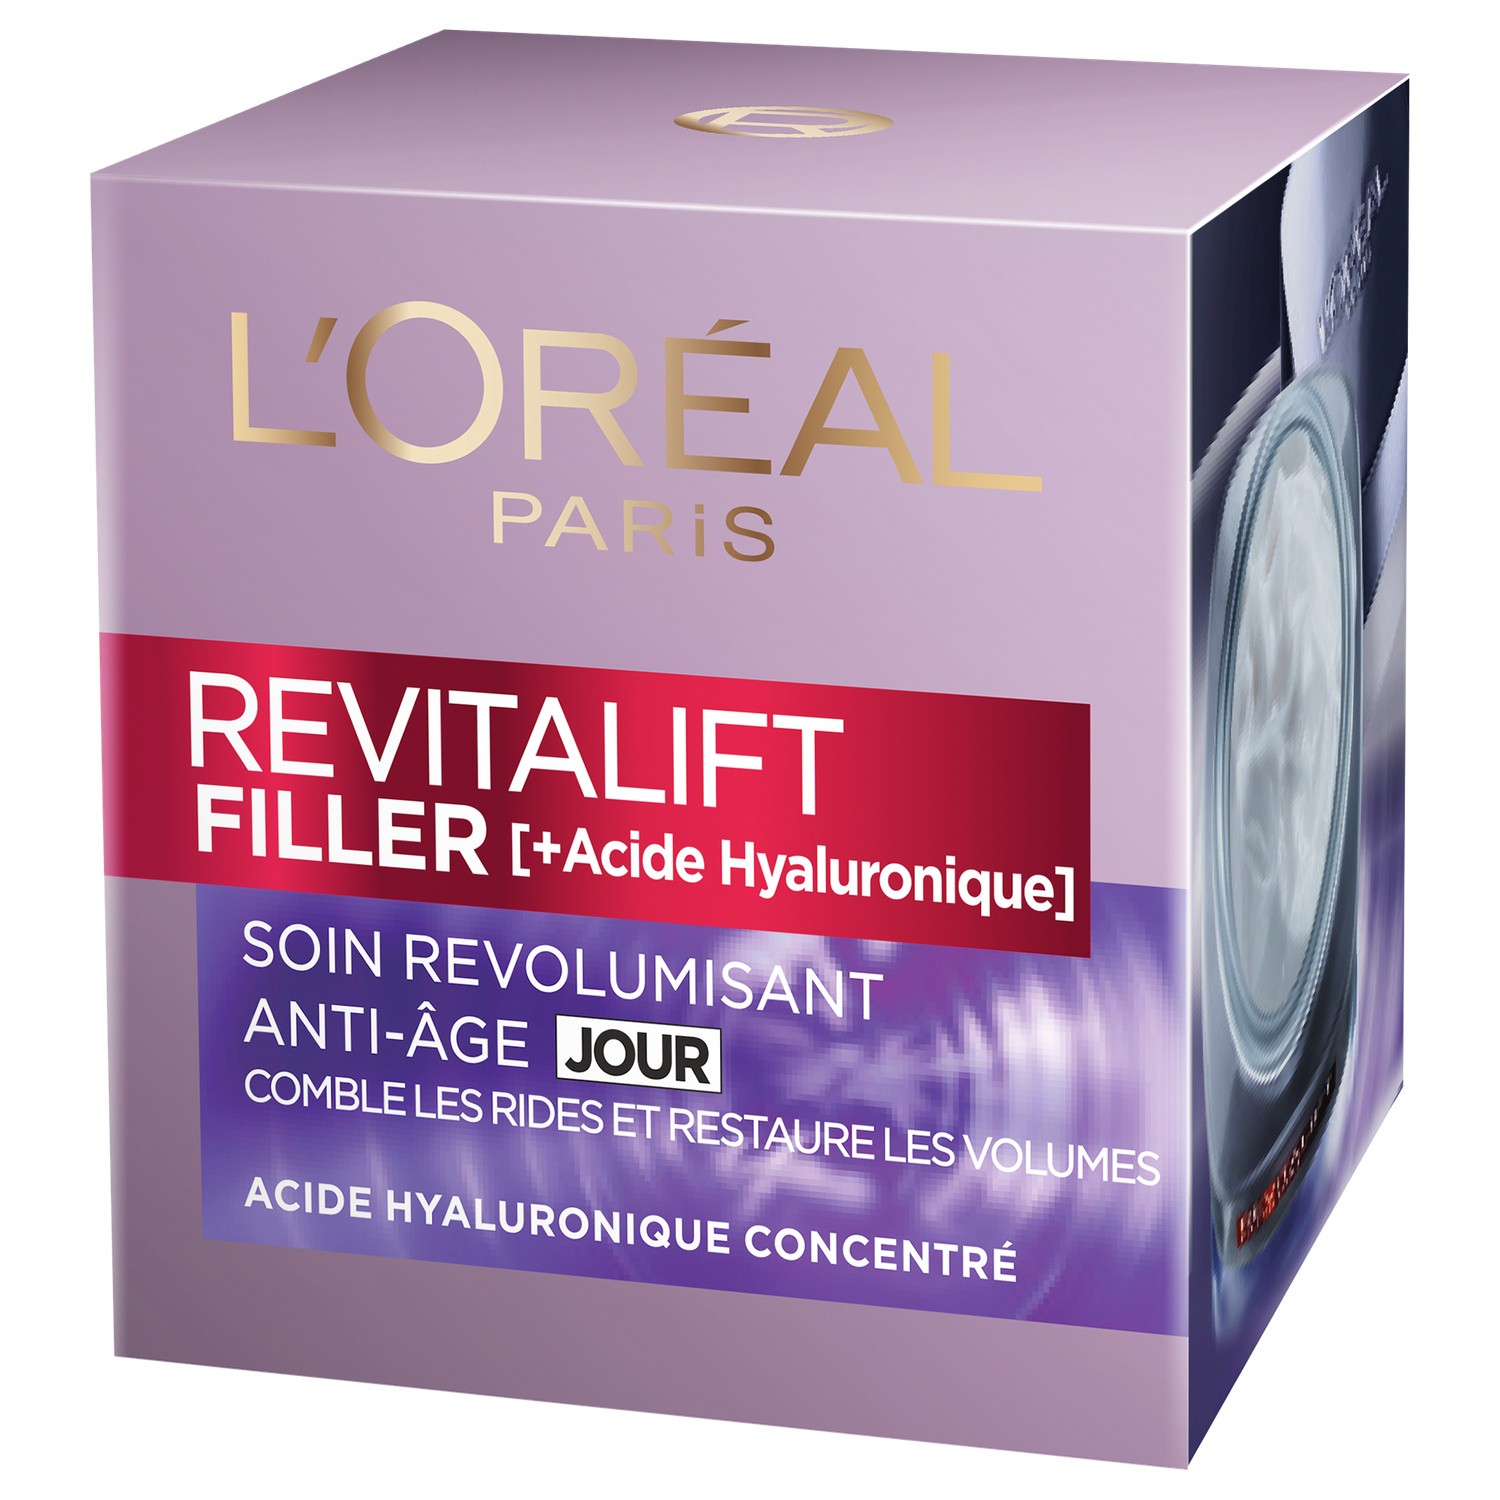  REVITALIFT L'OREAL PARIS  3600522892472